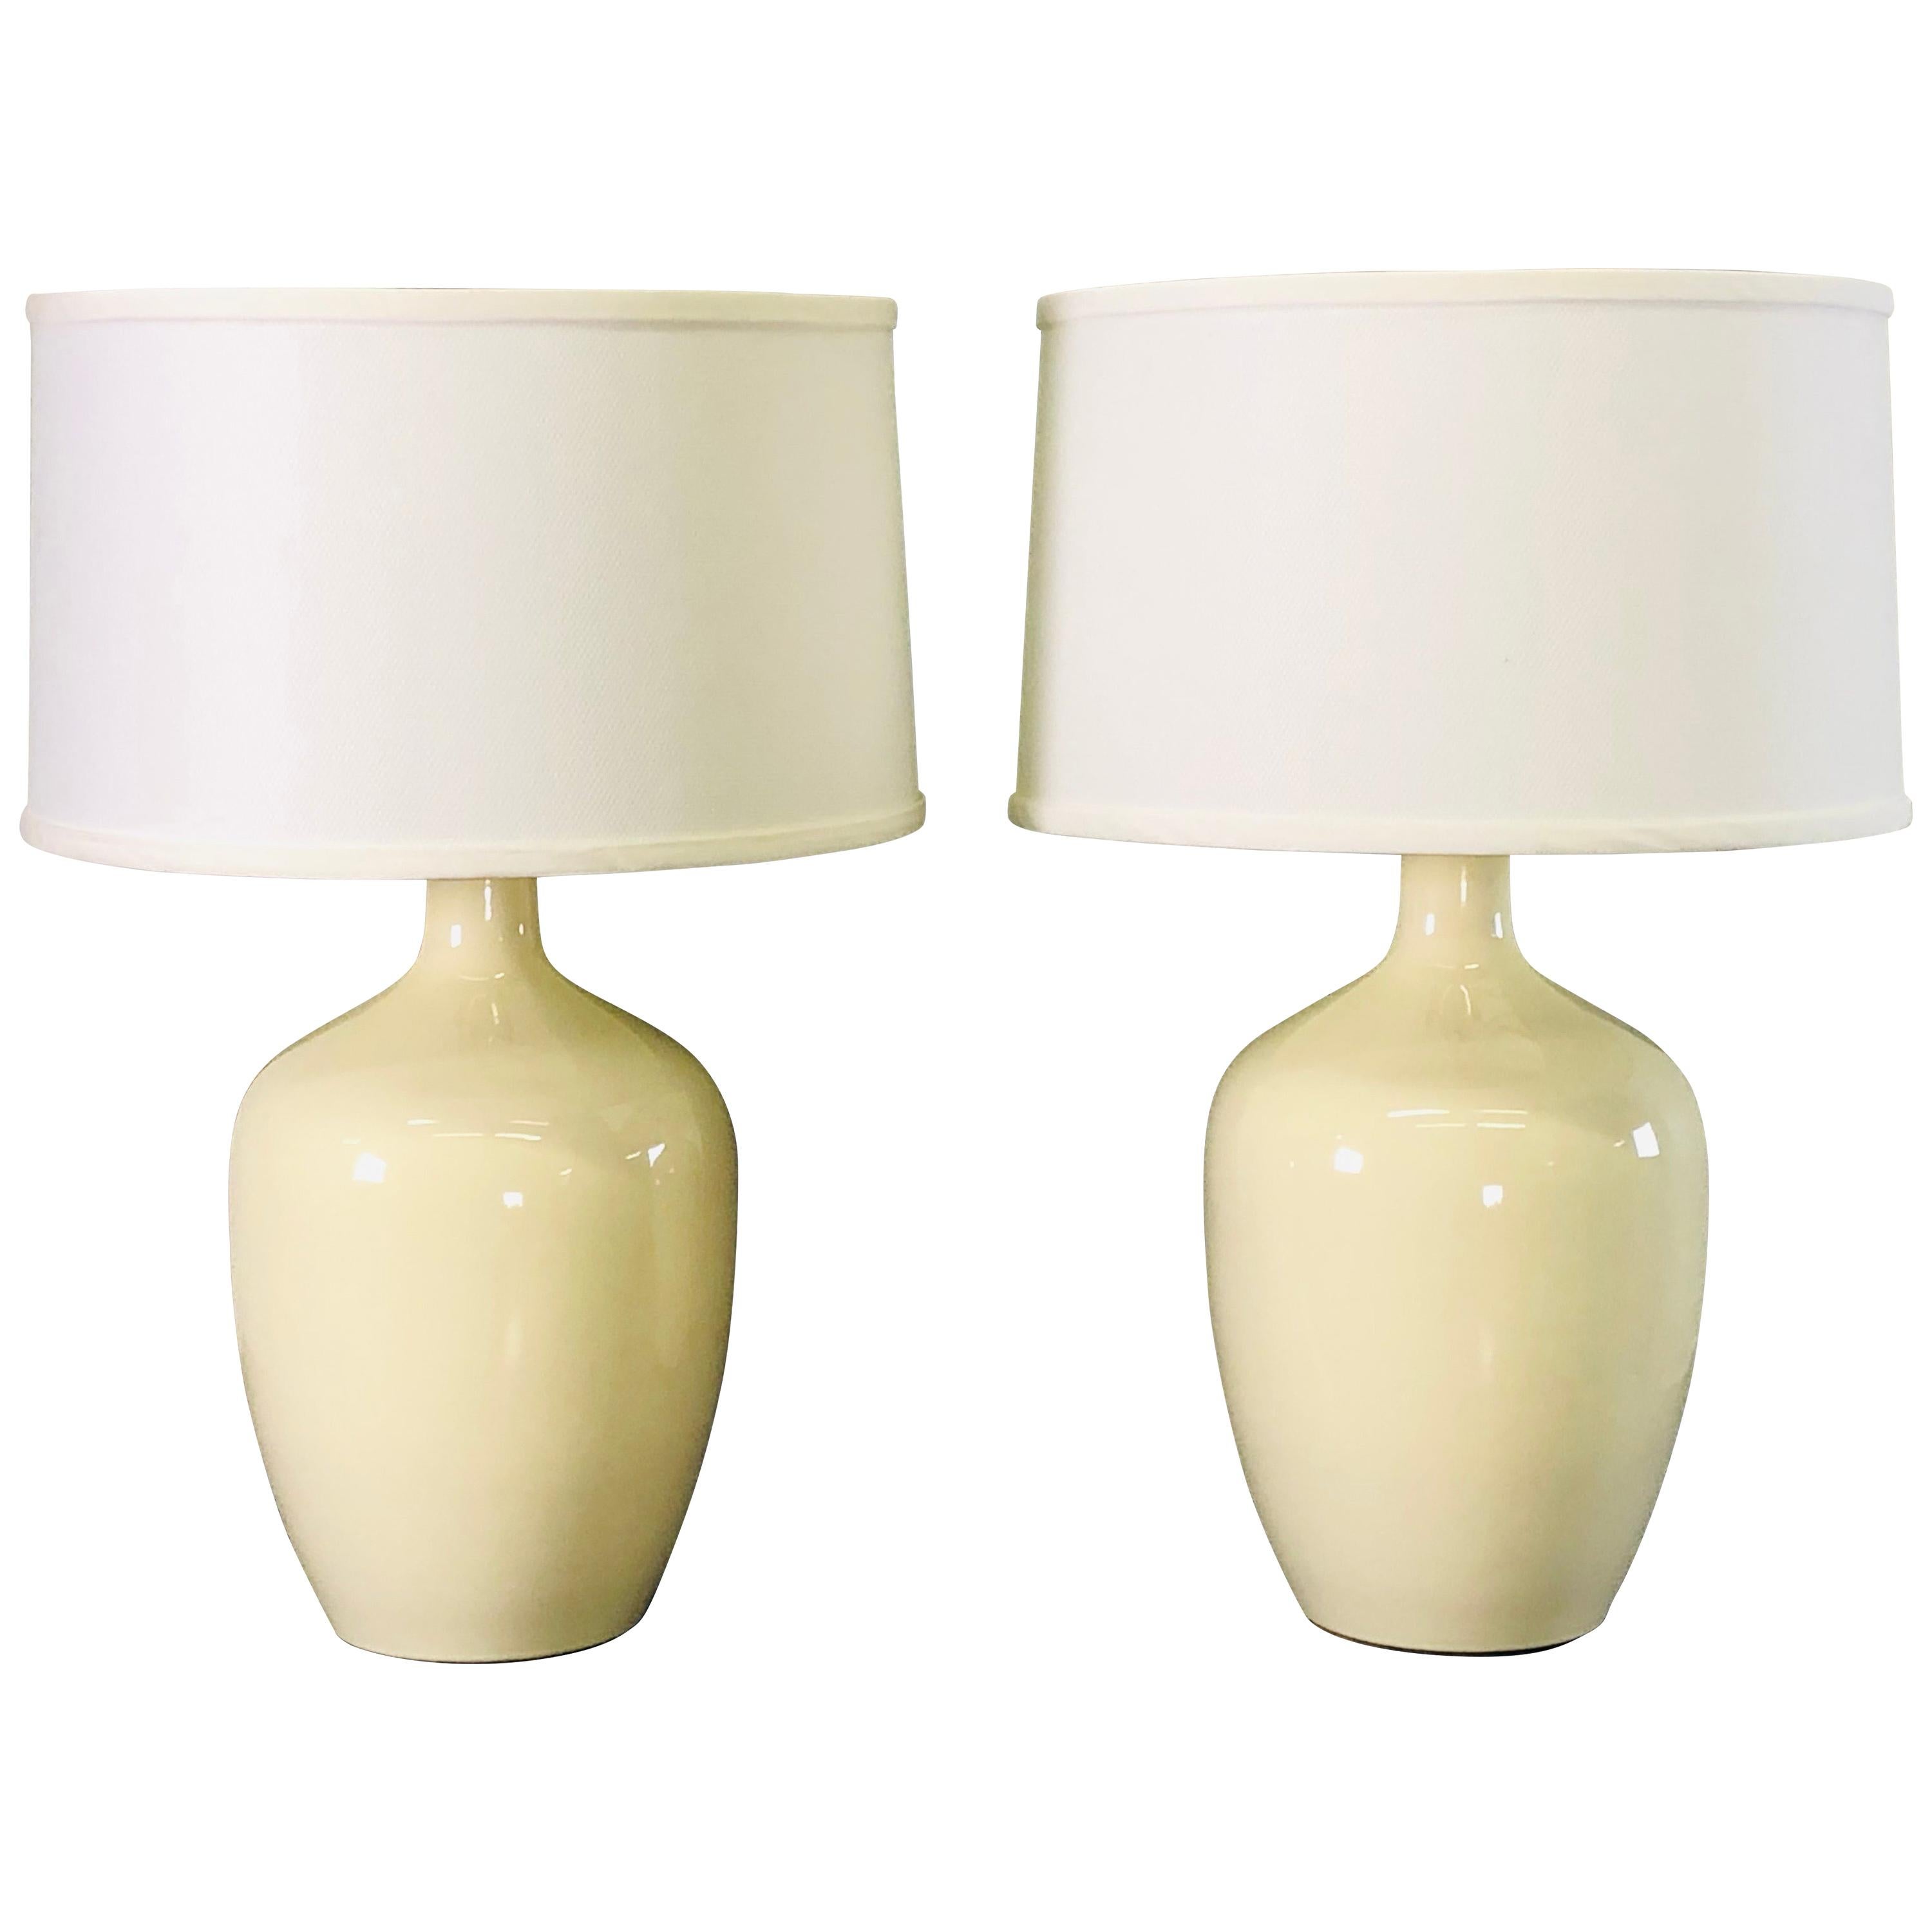 Vintage 1970s White Haeger Ceramic Lamps, Pair For Sale